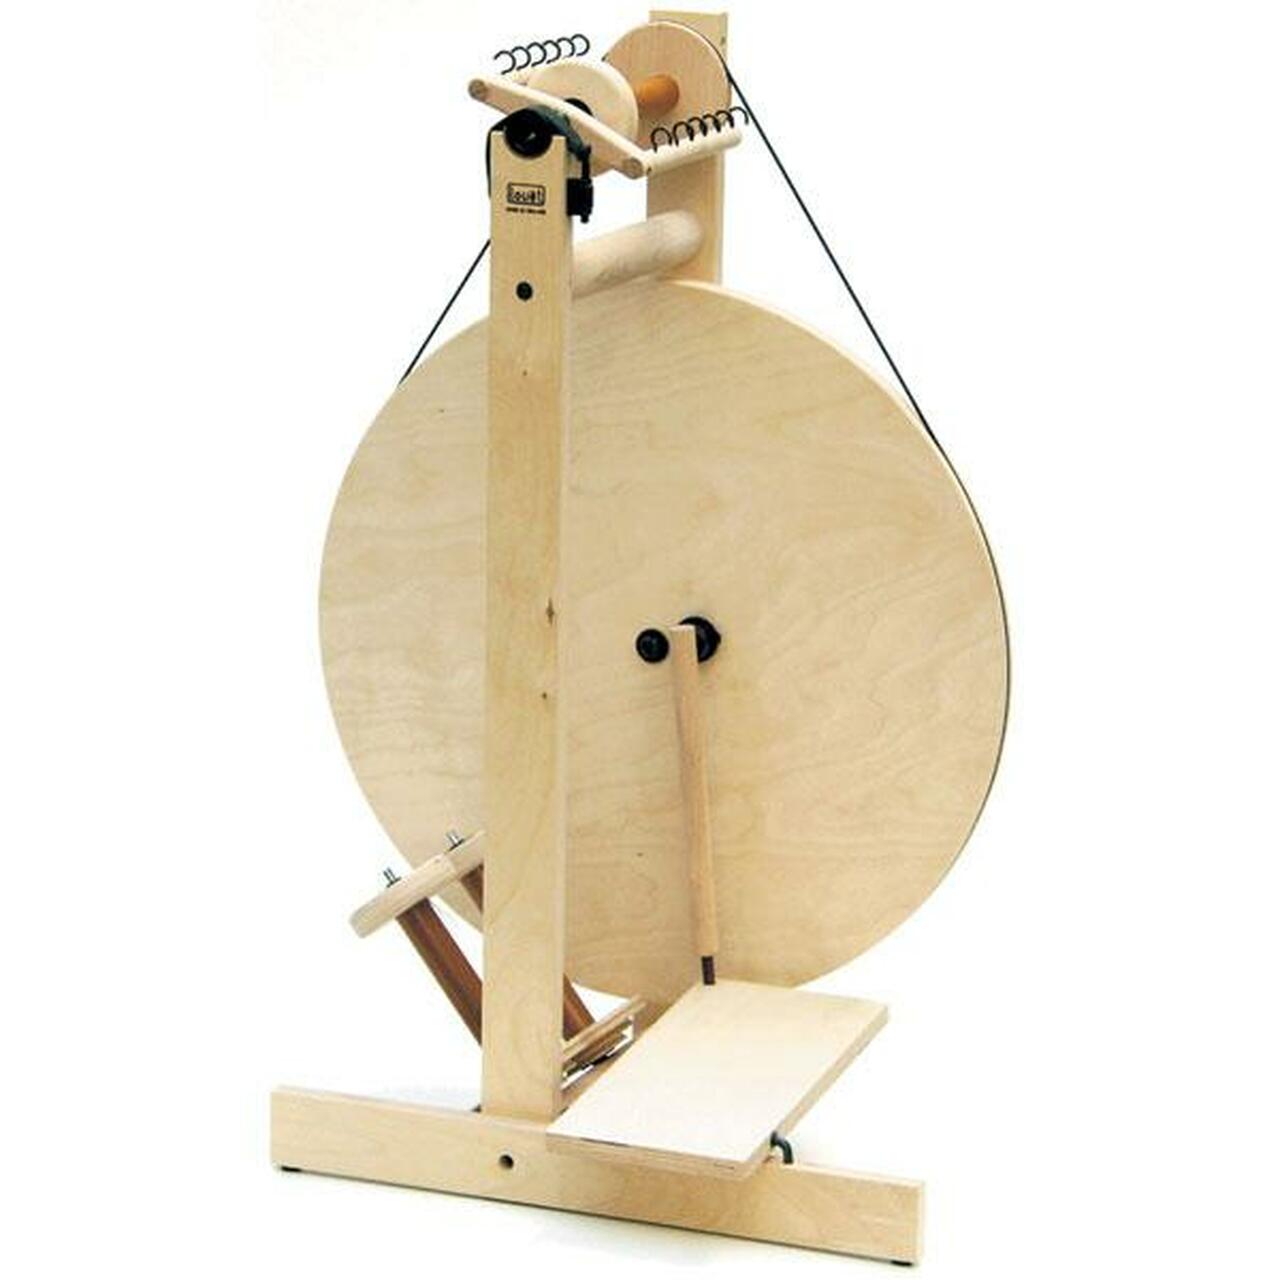 Louet S10 Art Yarn Spinning Wheel